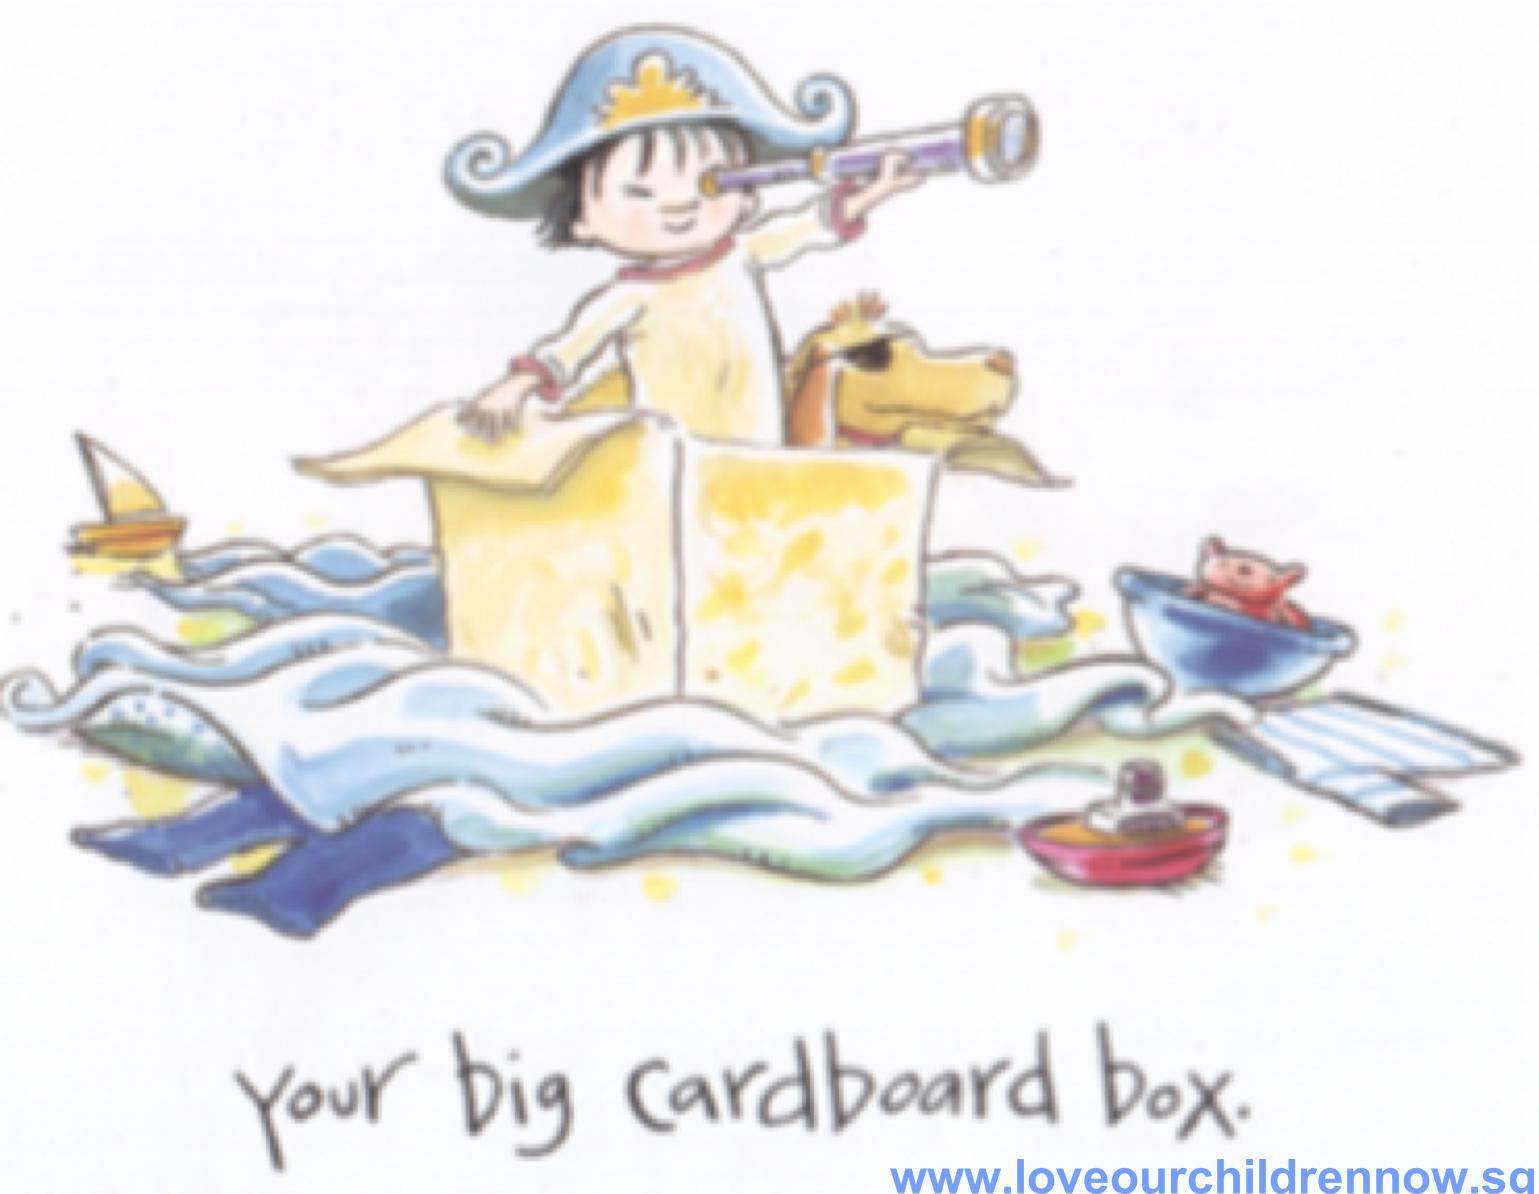 Little boy and Cardboard box_2